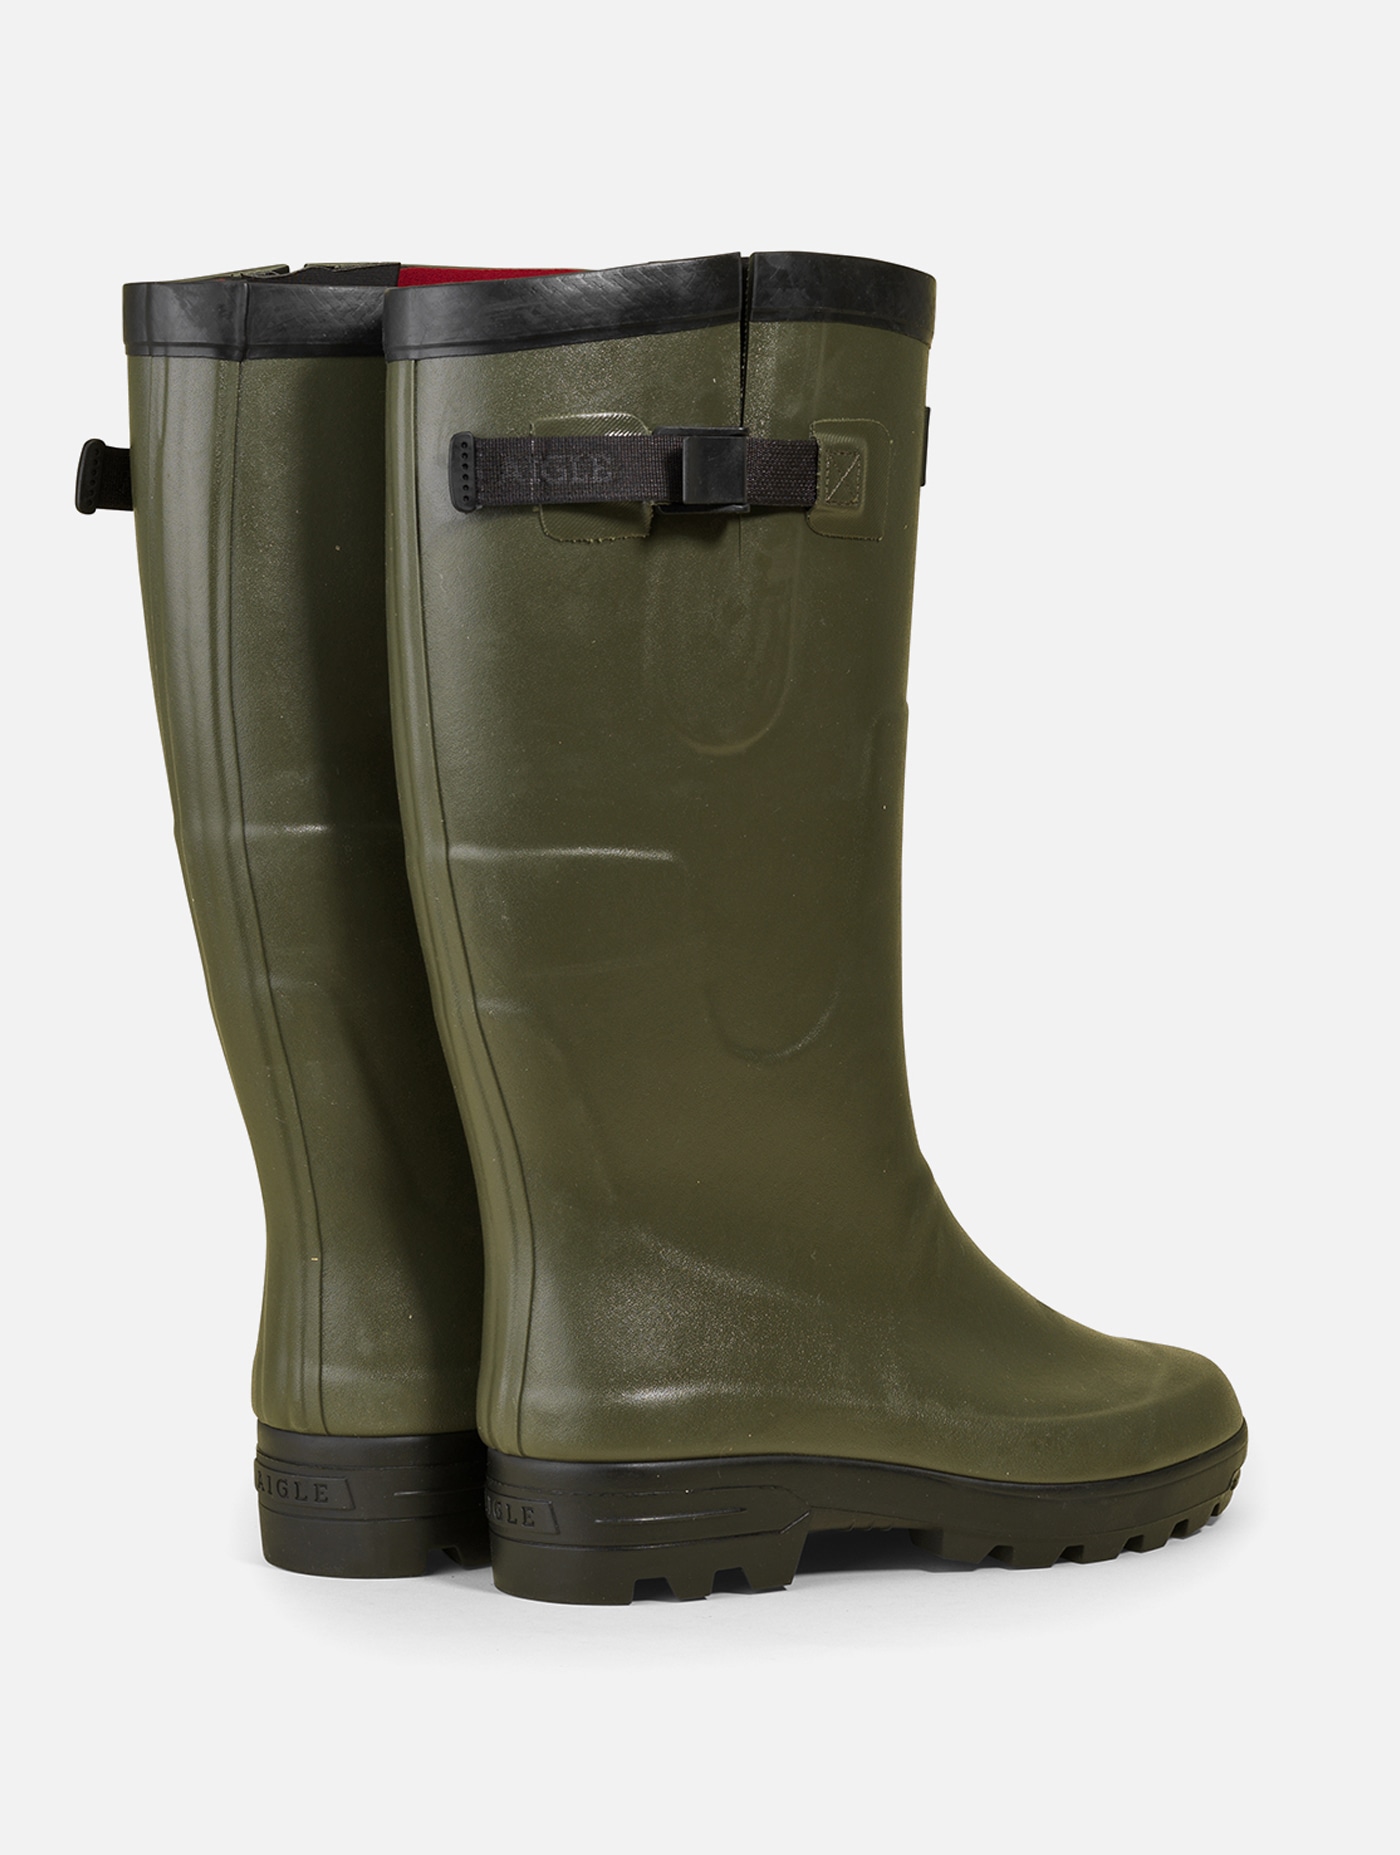 Aigle - Men's insulating hunting boots Kaki - vario | AIGLE